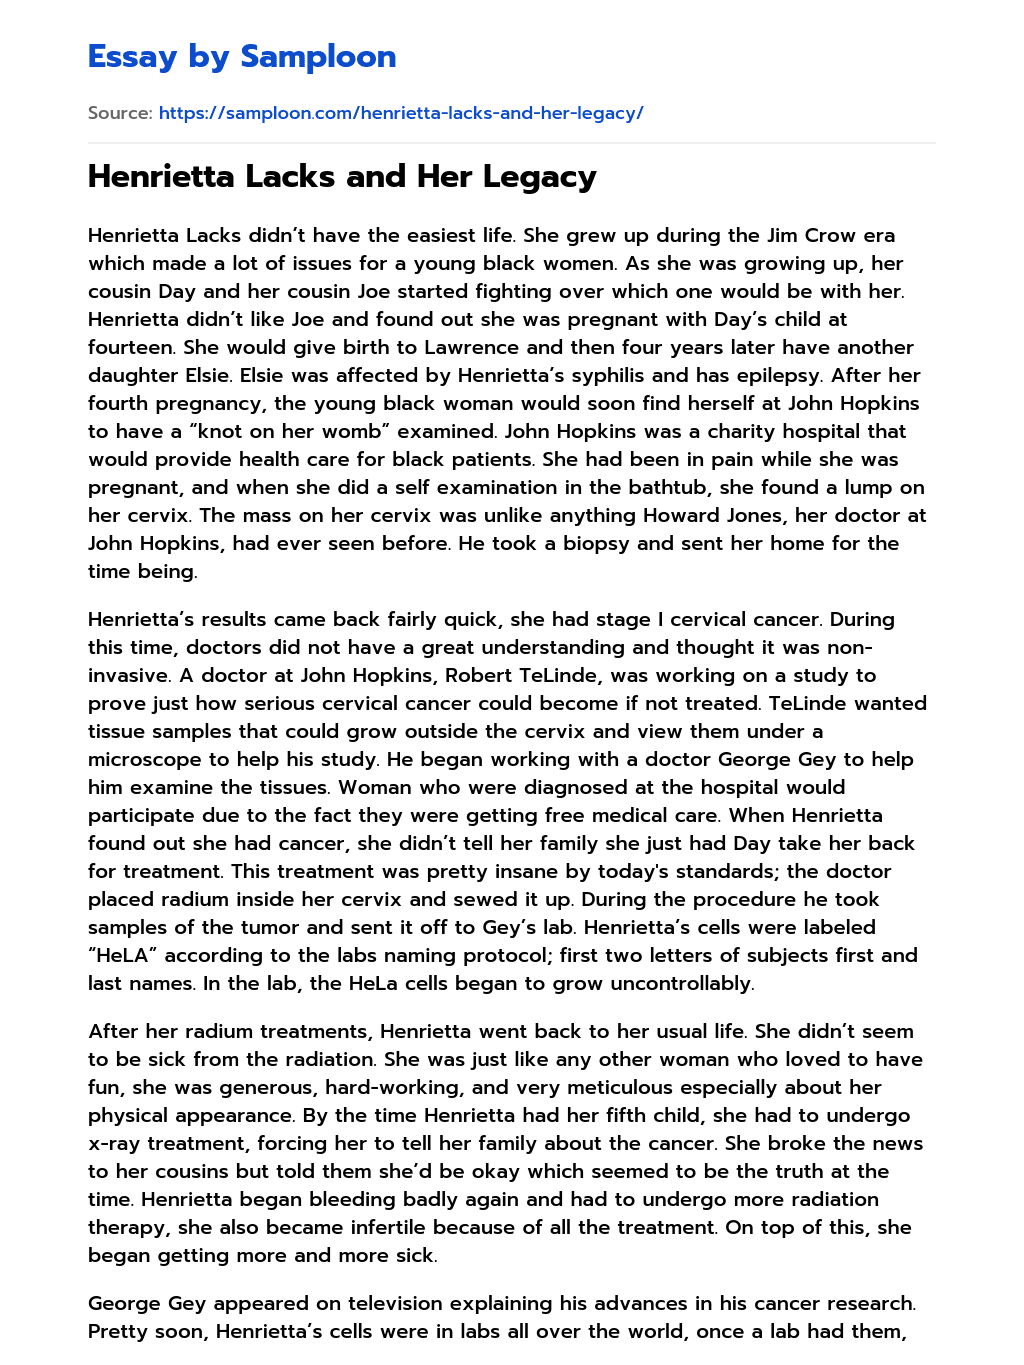 Henrietta Lacks and Her Legacy essay